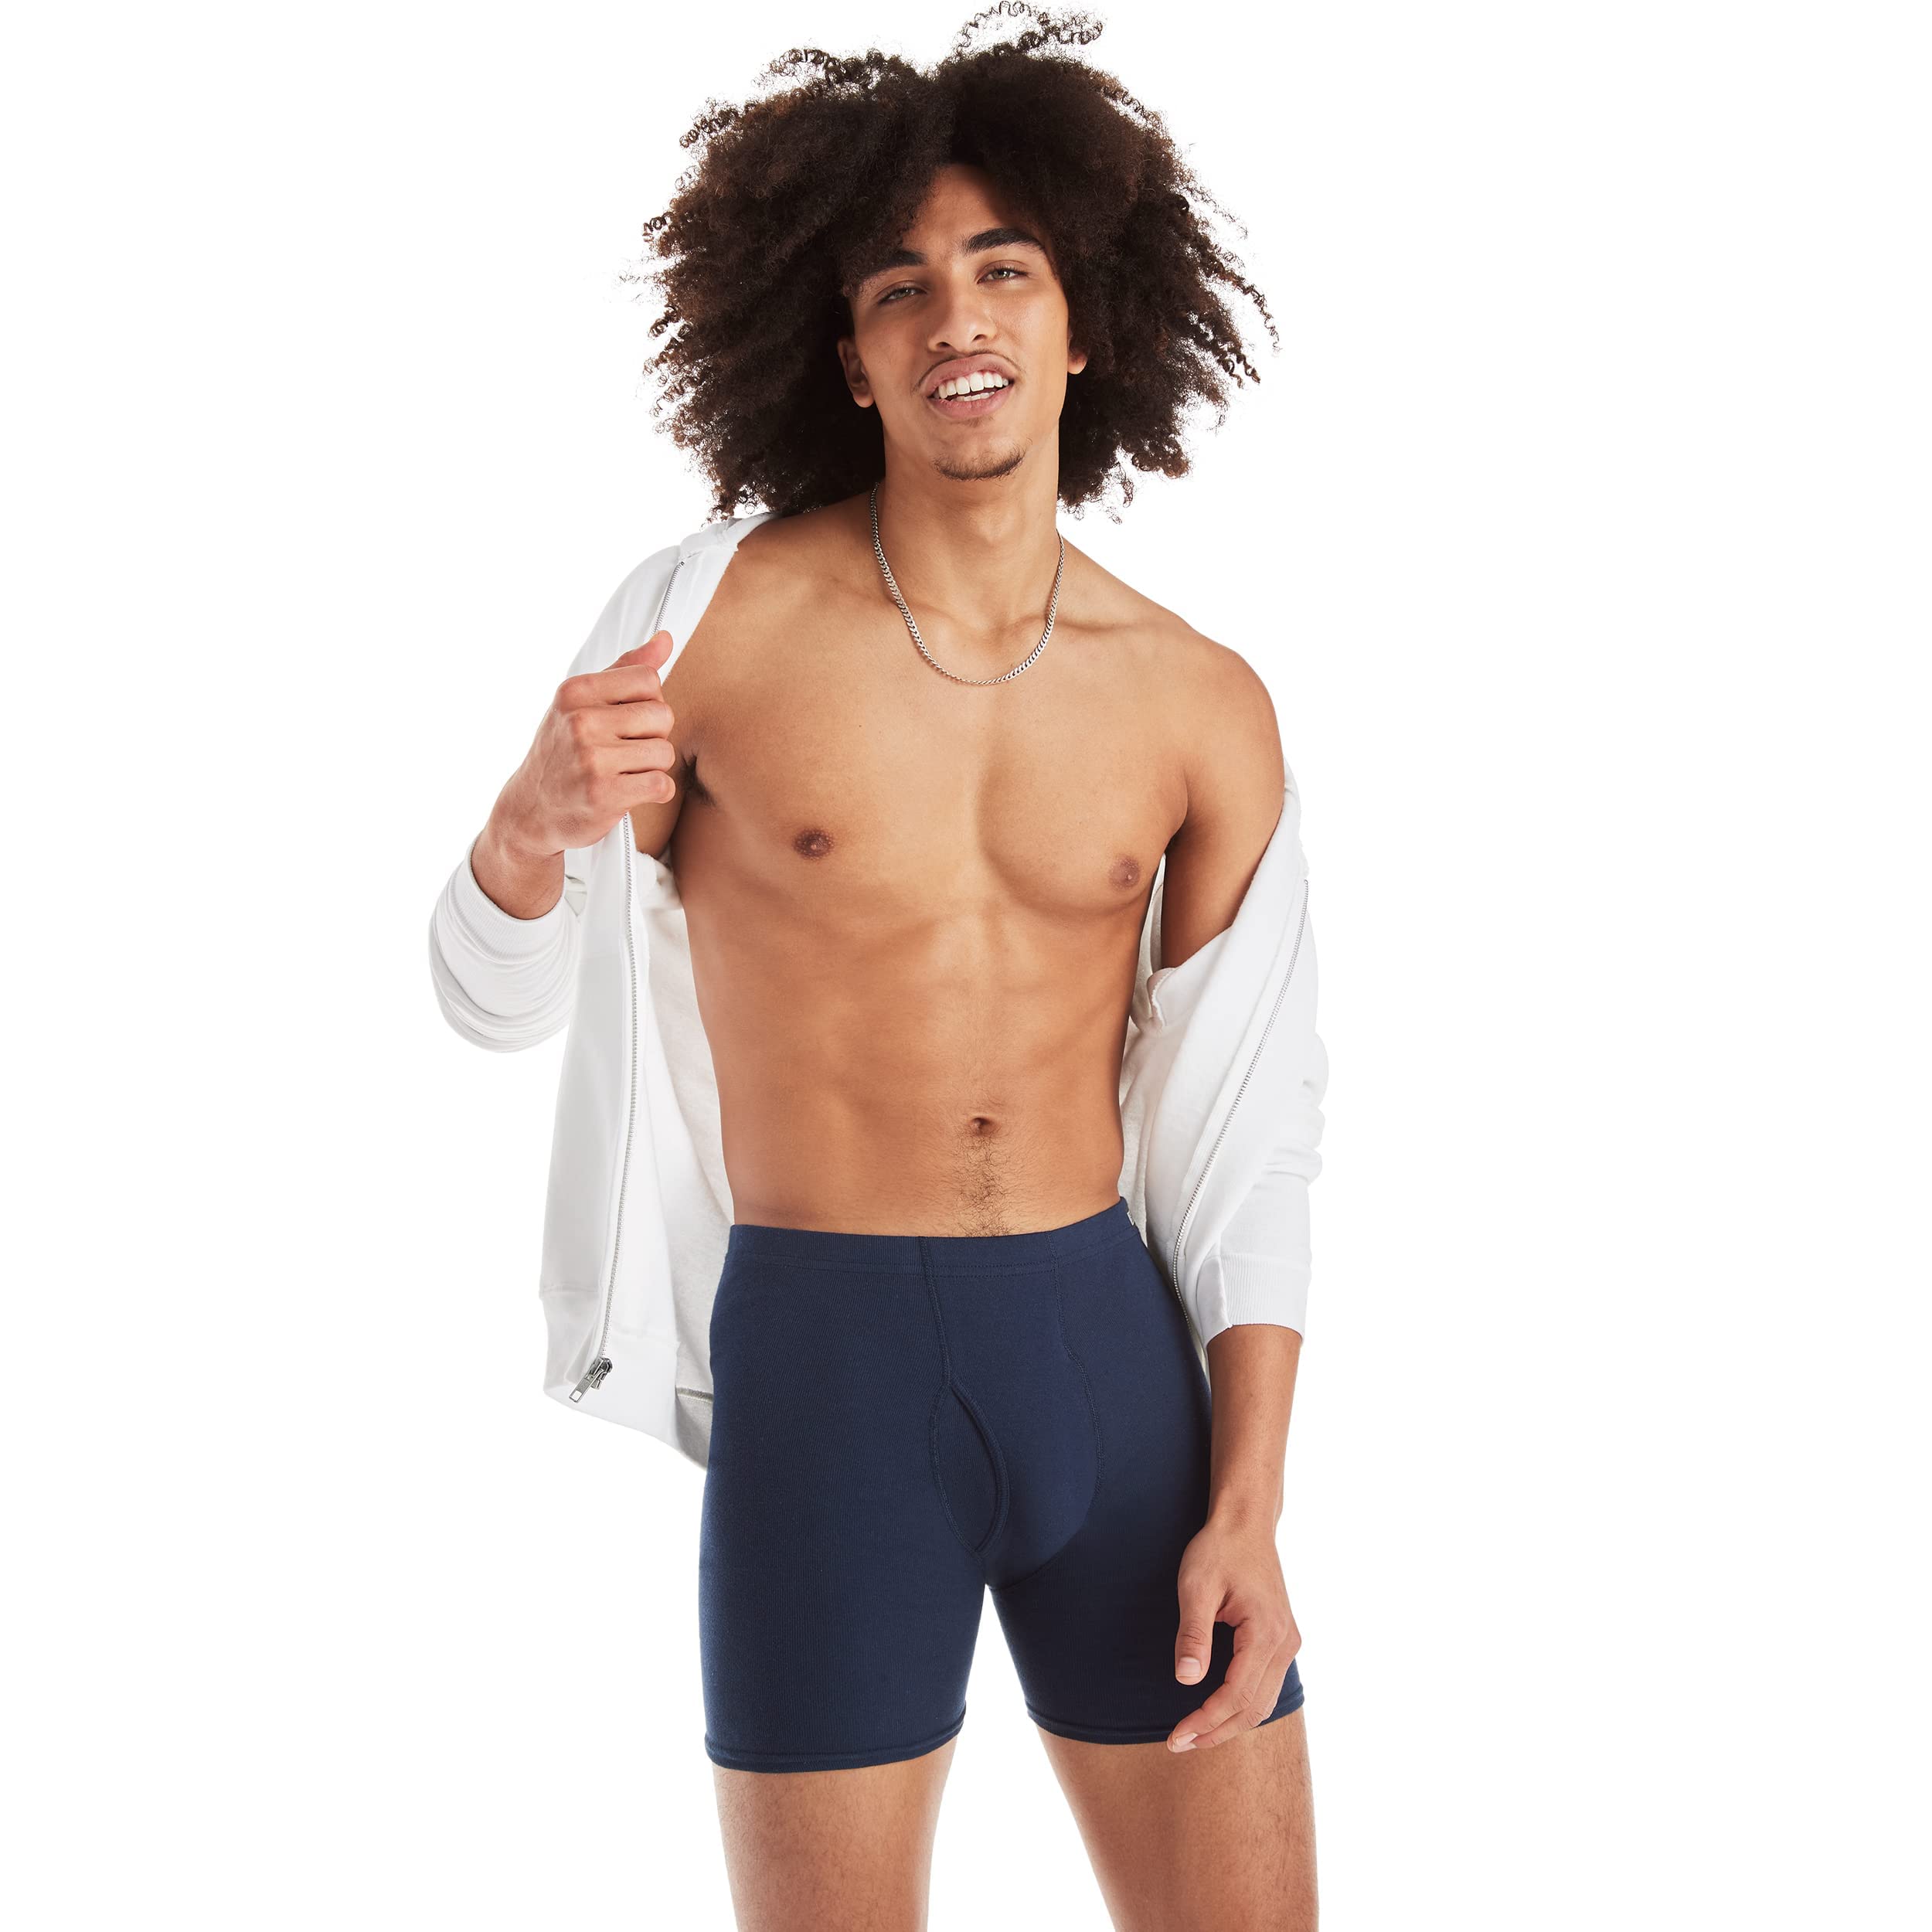 Hanes Men's Boxer Briefs, Cool Comfort Moisture-Wicking Breathable Underwear, Multi-Pack